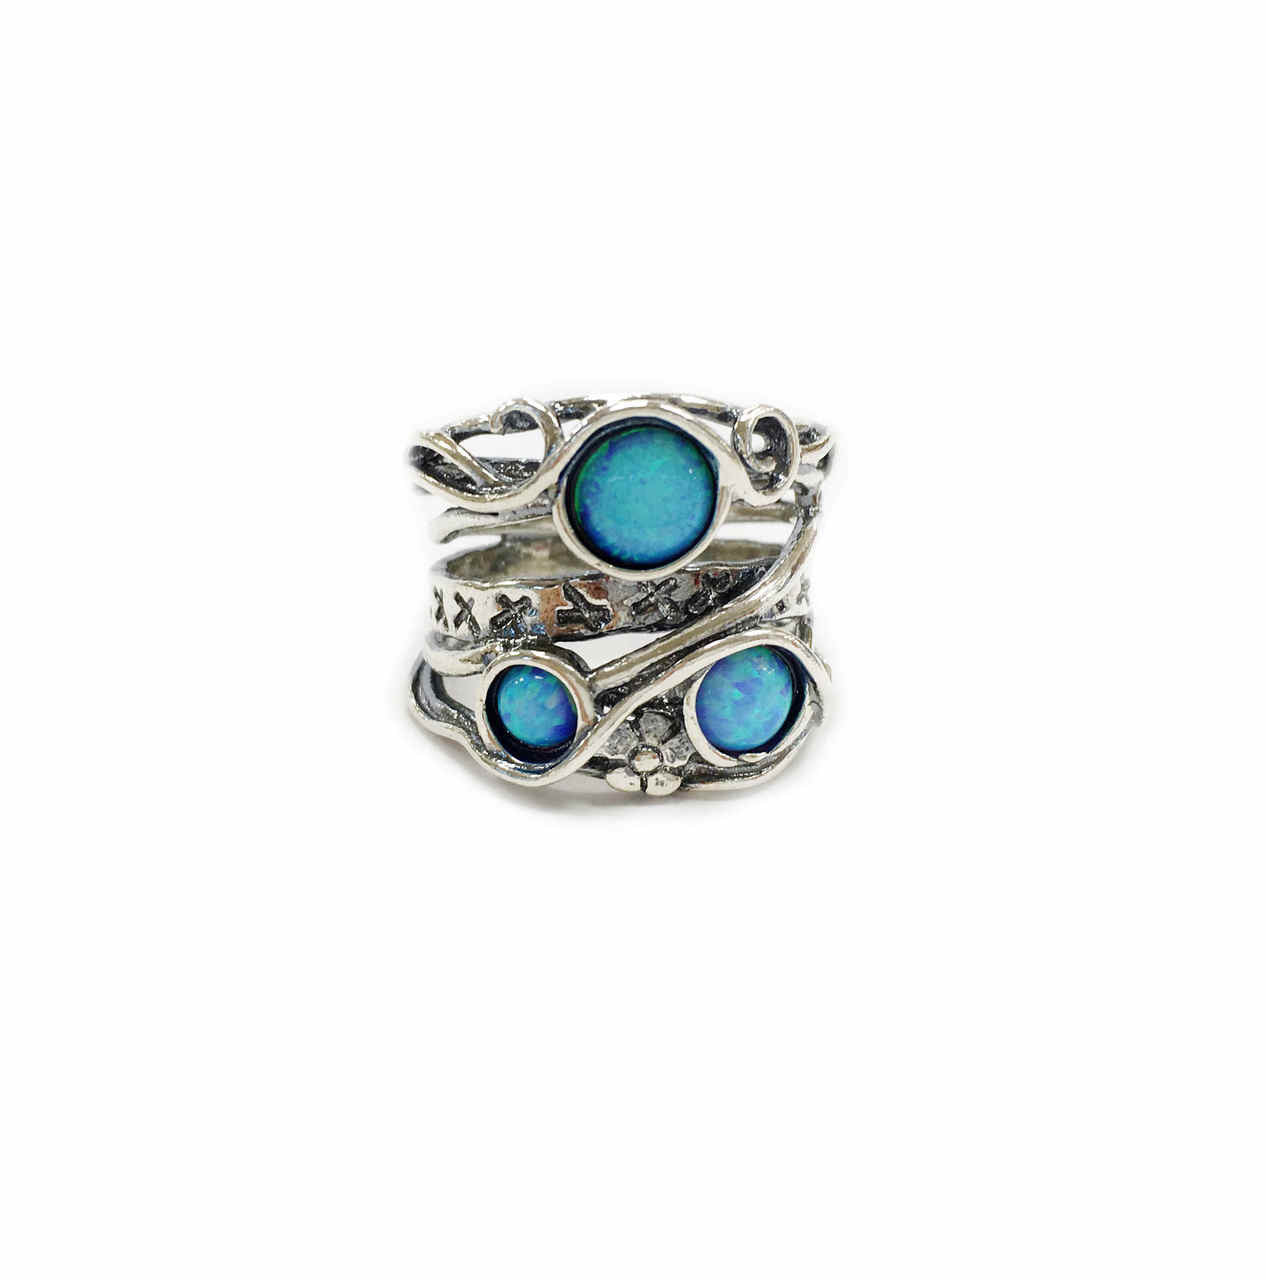 Opal Flowers Ring - The Nancy Smillie Shop - Art, Jewellery & Designer Gifts Glasgow